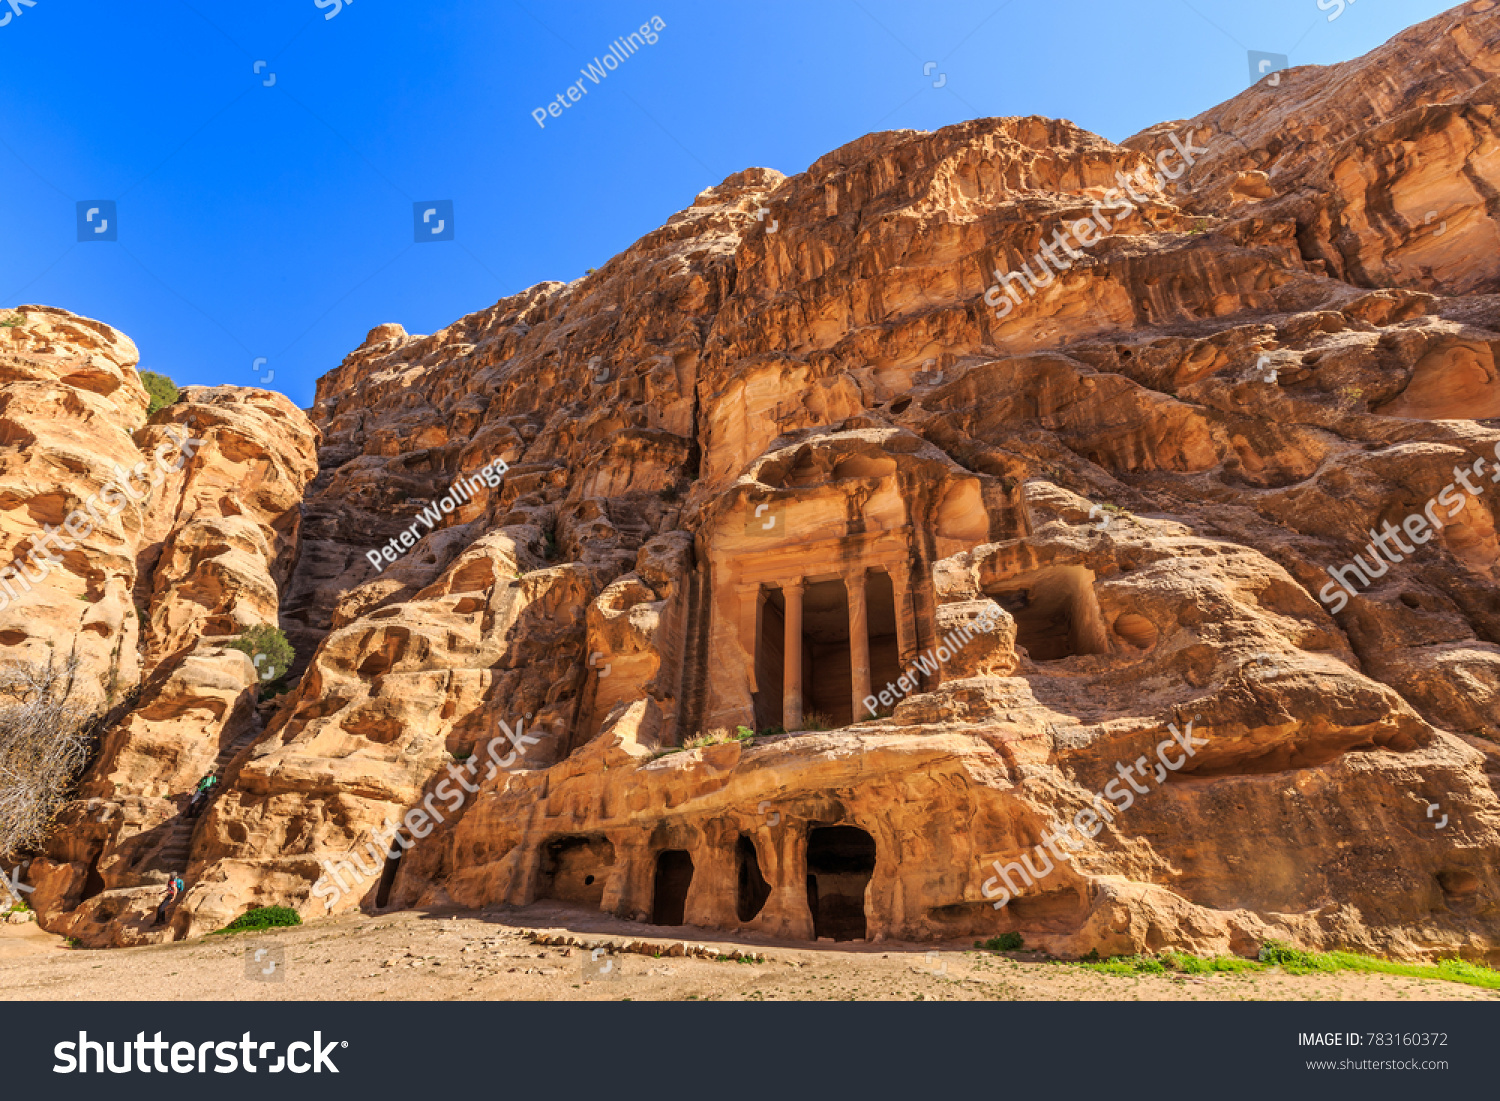 Caved buildings of Little Petra in Siq al-Barid, Wadi Musa, Jordan at daytime #783160372